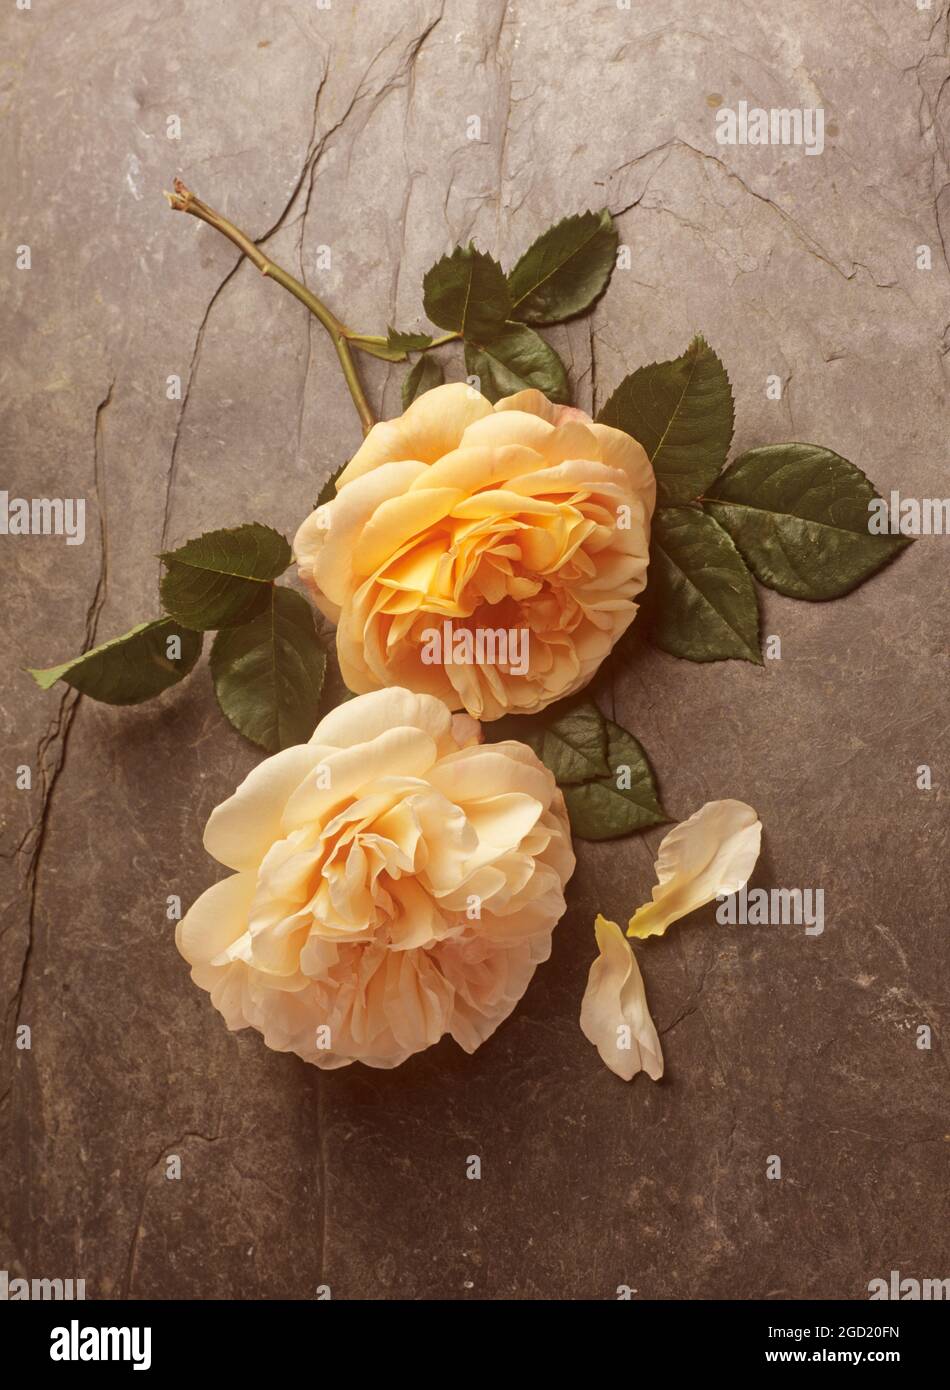 botanik, zwei Rosen auf Schieferplatte, ADDITIONAL-RIGHTS-CLEARANCE-INFO-NOT-AVAILABLE Stockfoto